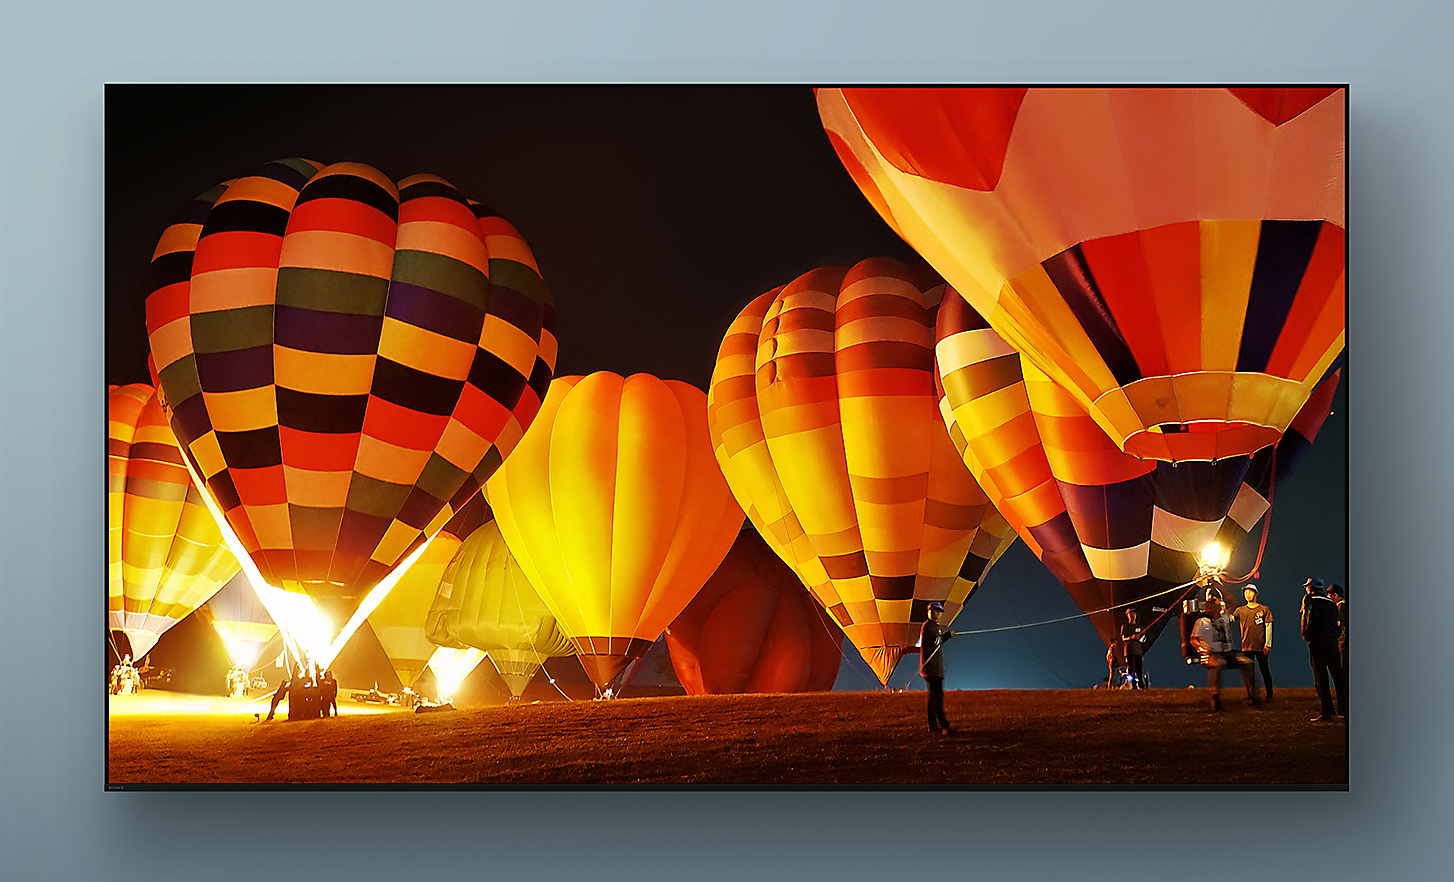 BRAVIA TV 螢幕顯示五彩繽紛的熱氣球在夜空中升空